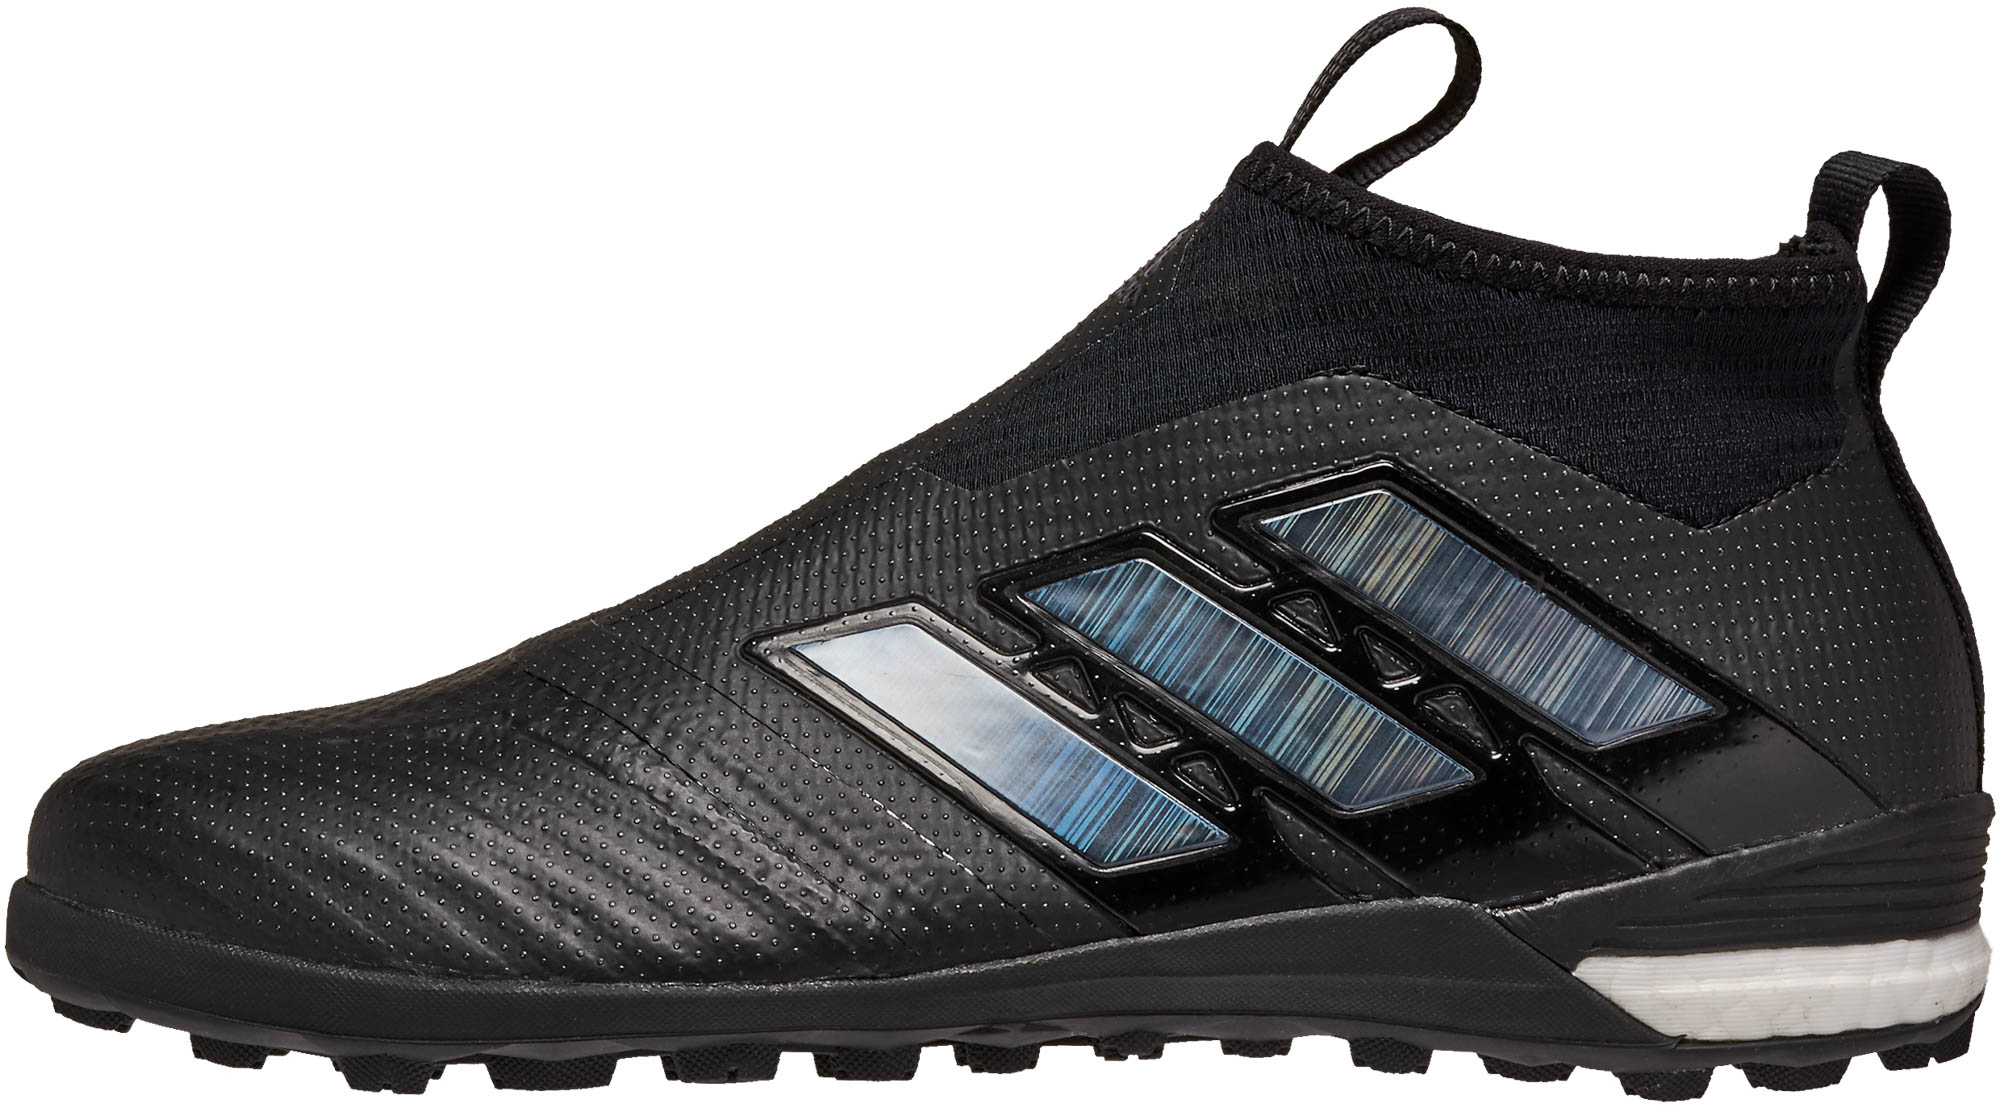 Descarga Arruinado cuchara adidas ACE 17 Purecontrol TF - Black Soccer Shoes